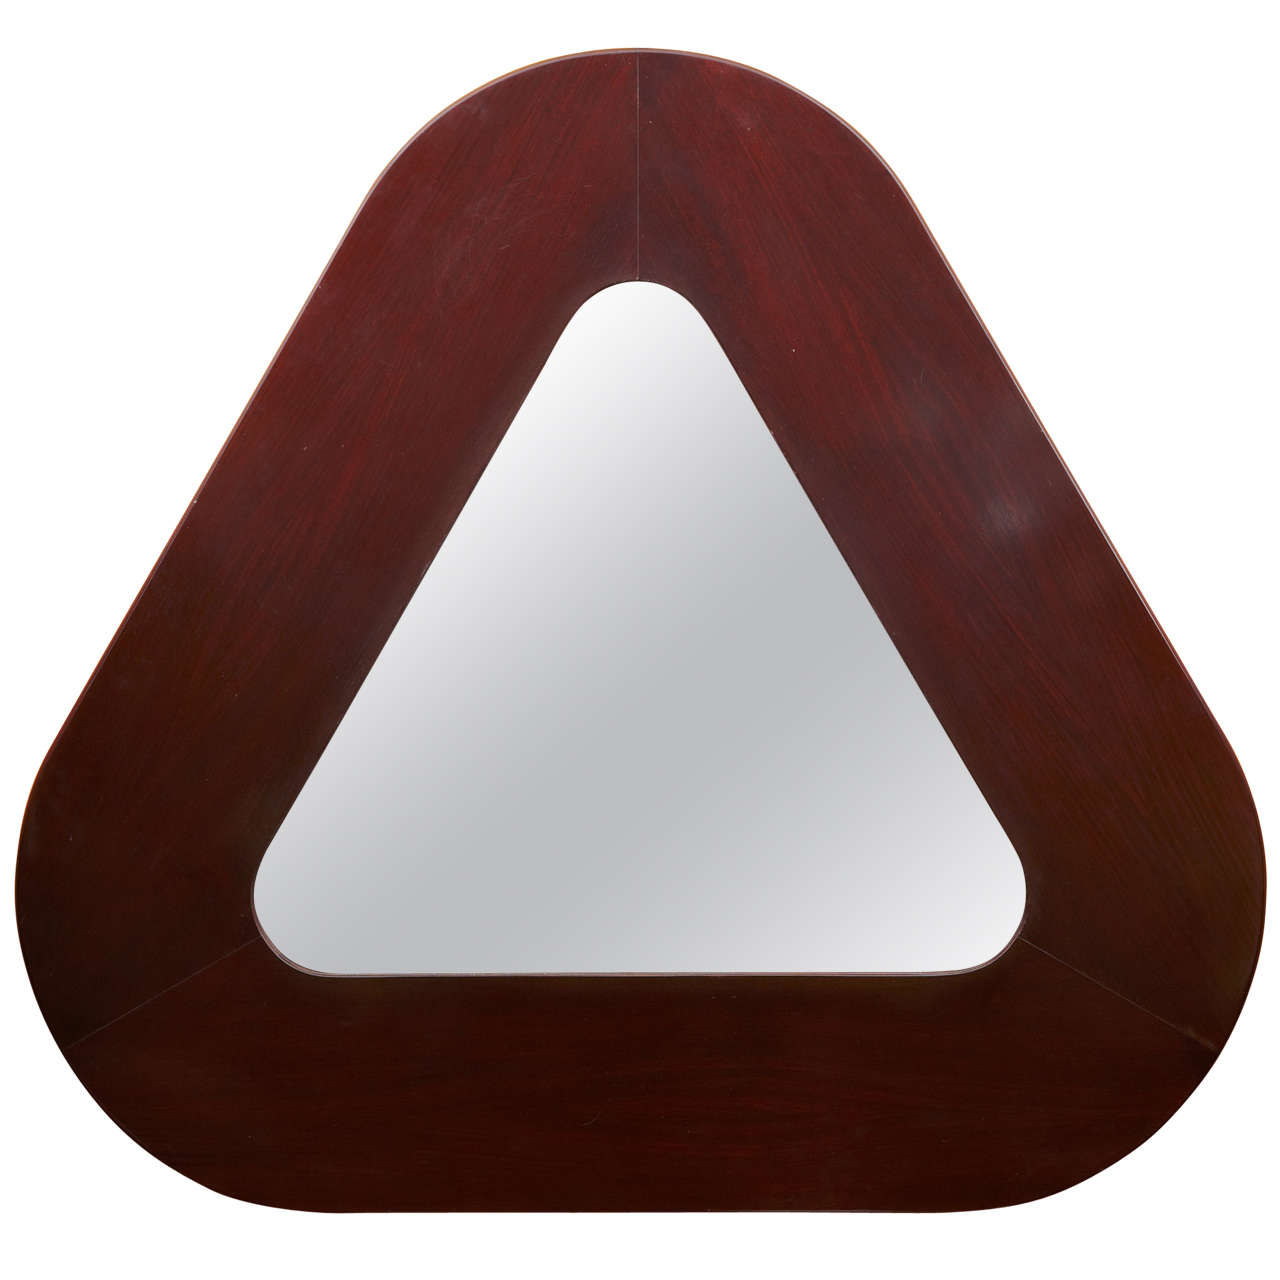 Impressive Triangular Rosewood Mirror For Sale